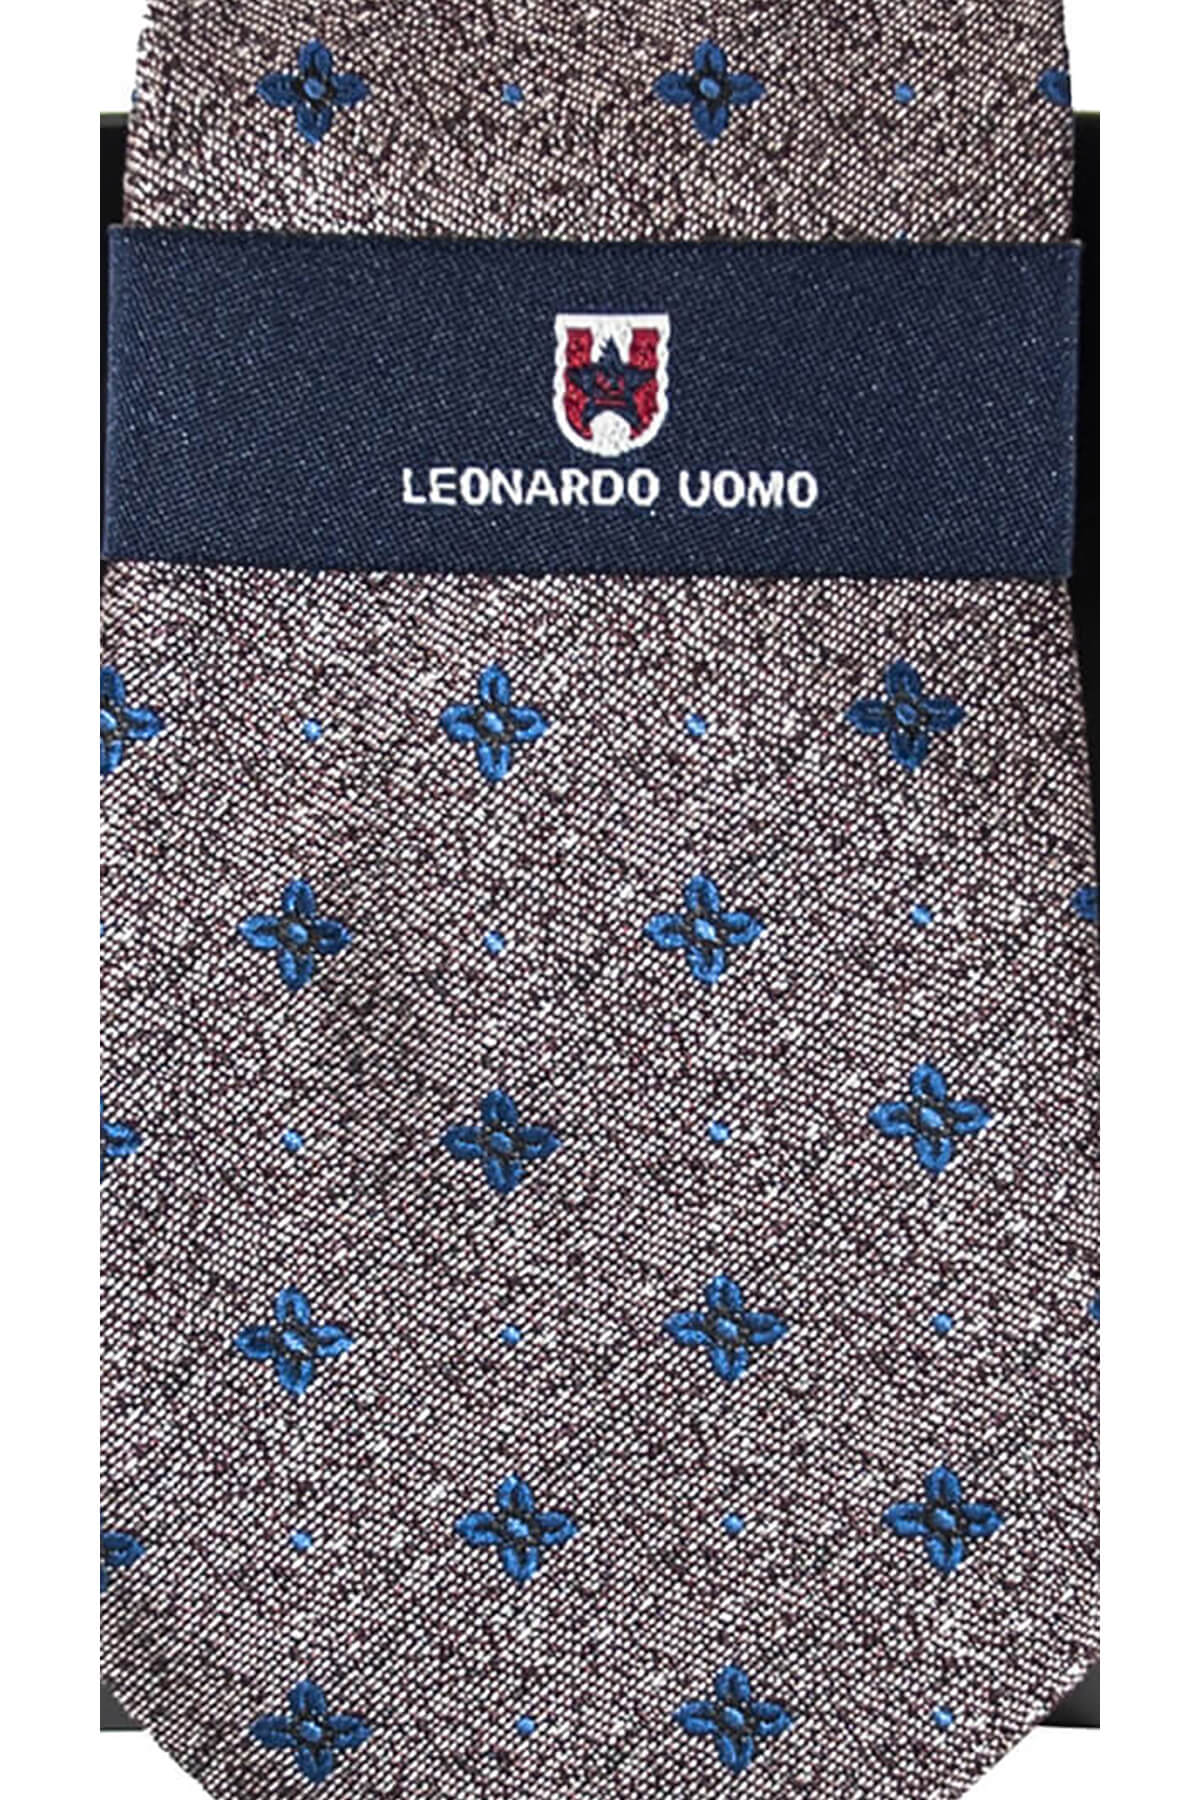 Leonardo Uomo Pinted Tie